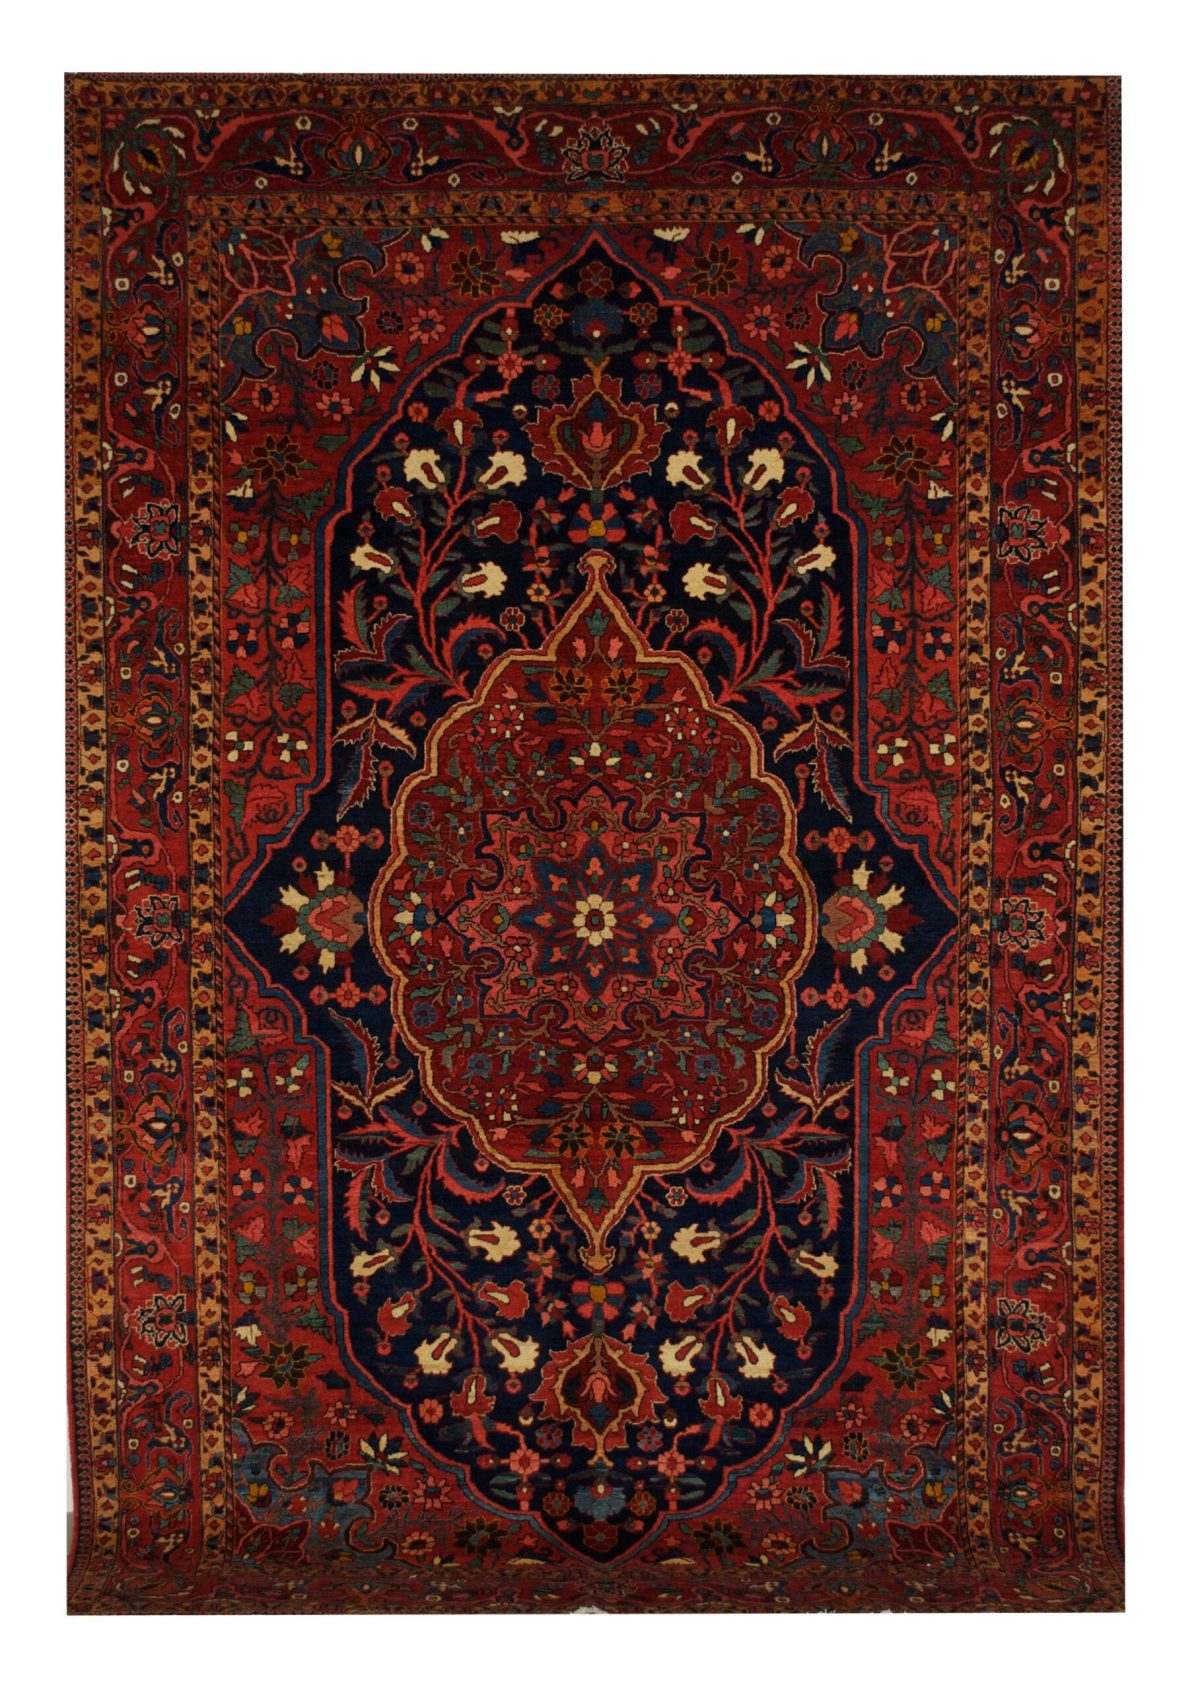 Antique Persian Bakhtiari 7' 2" x 10' 8" Handmade Wool Area Rug - Shabahang Royal Carpet